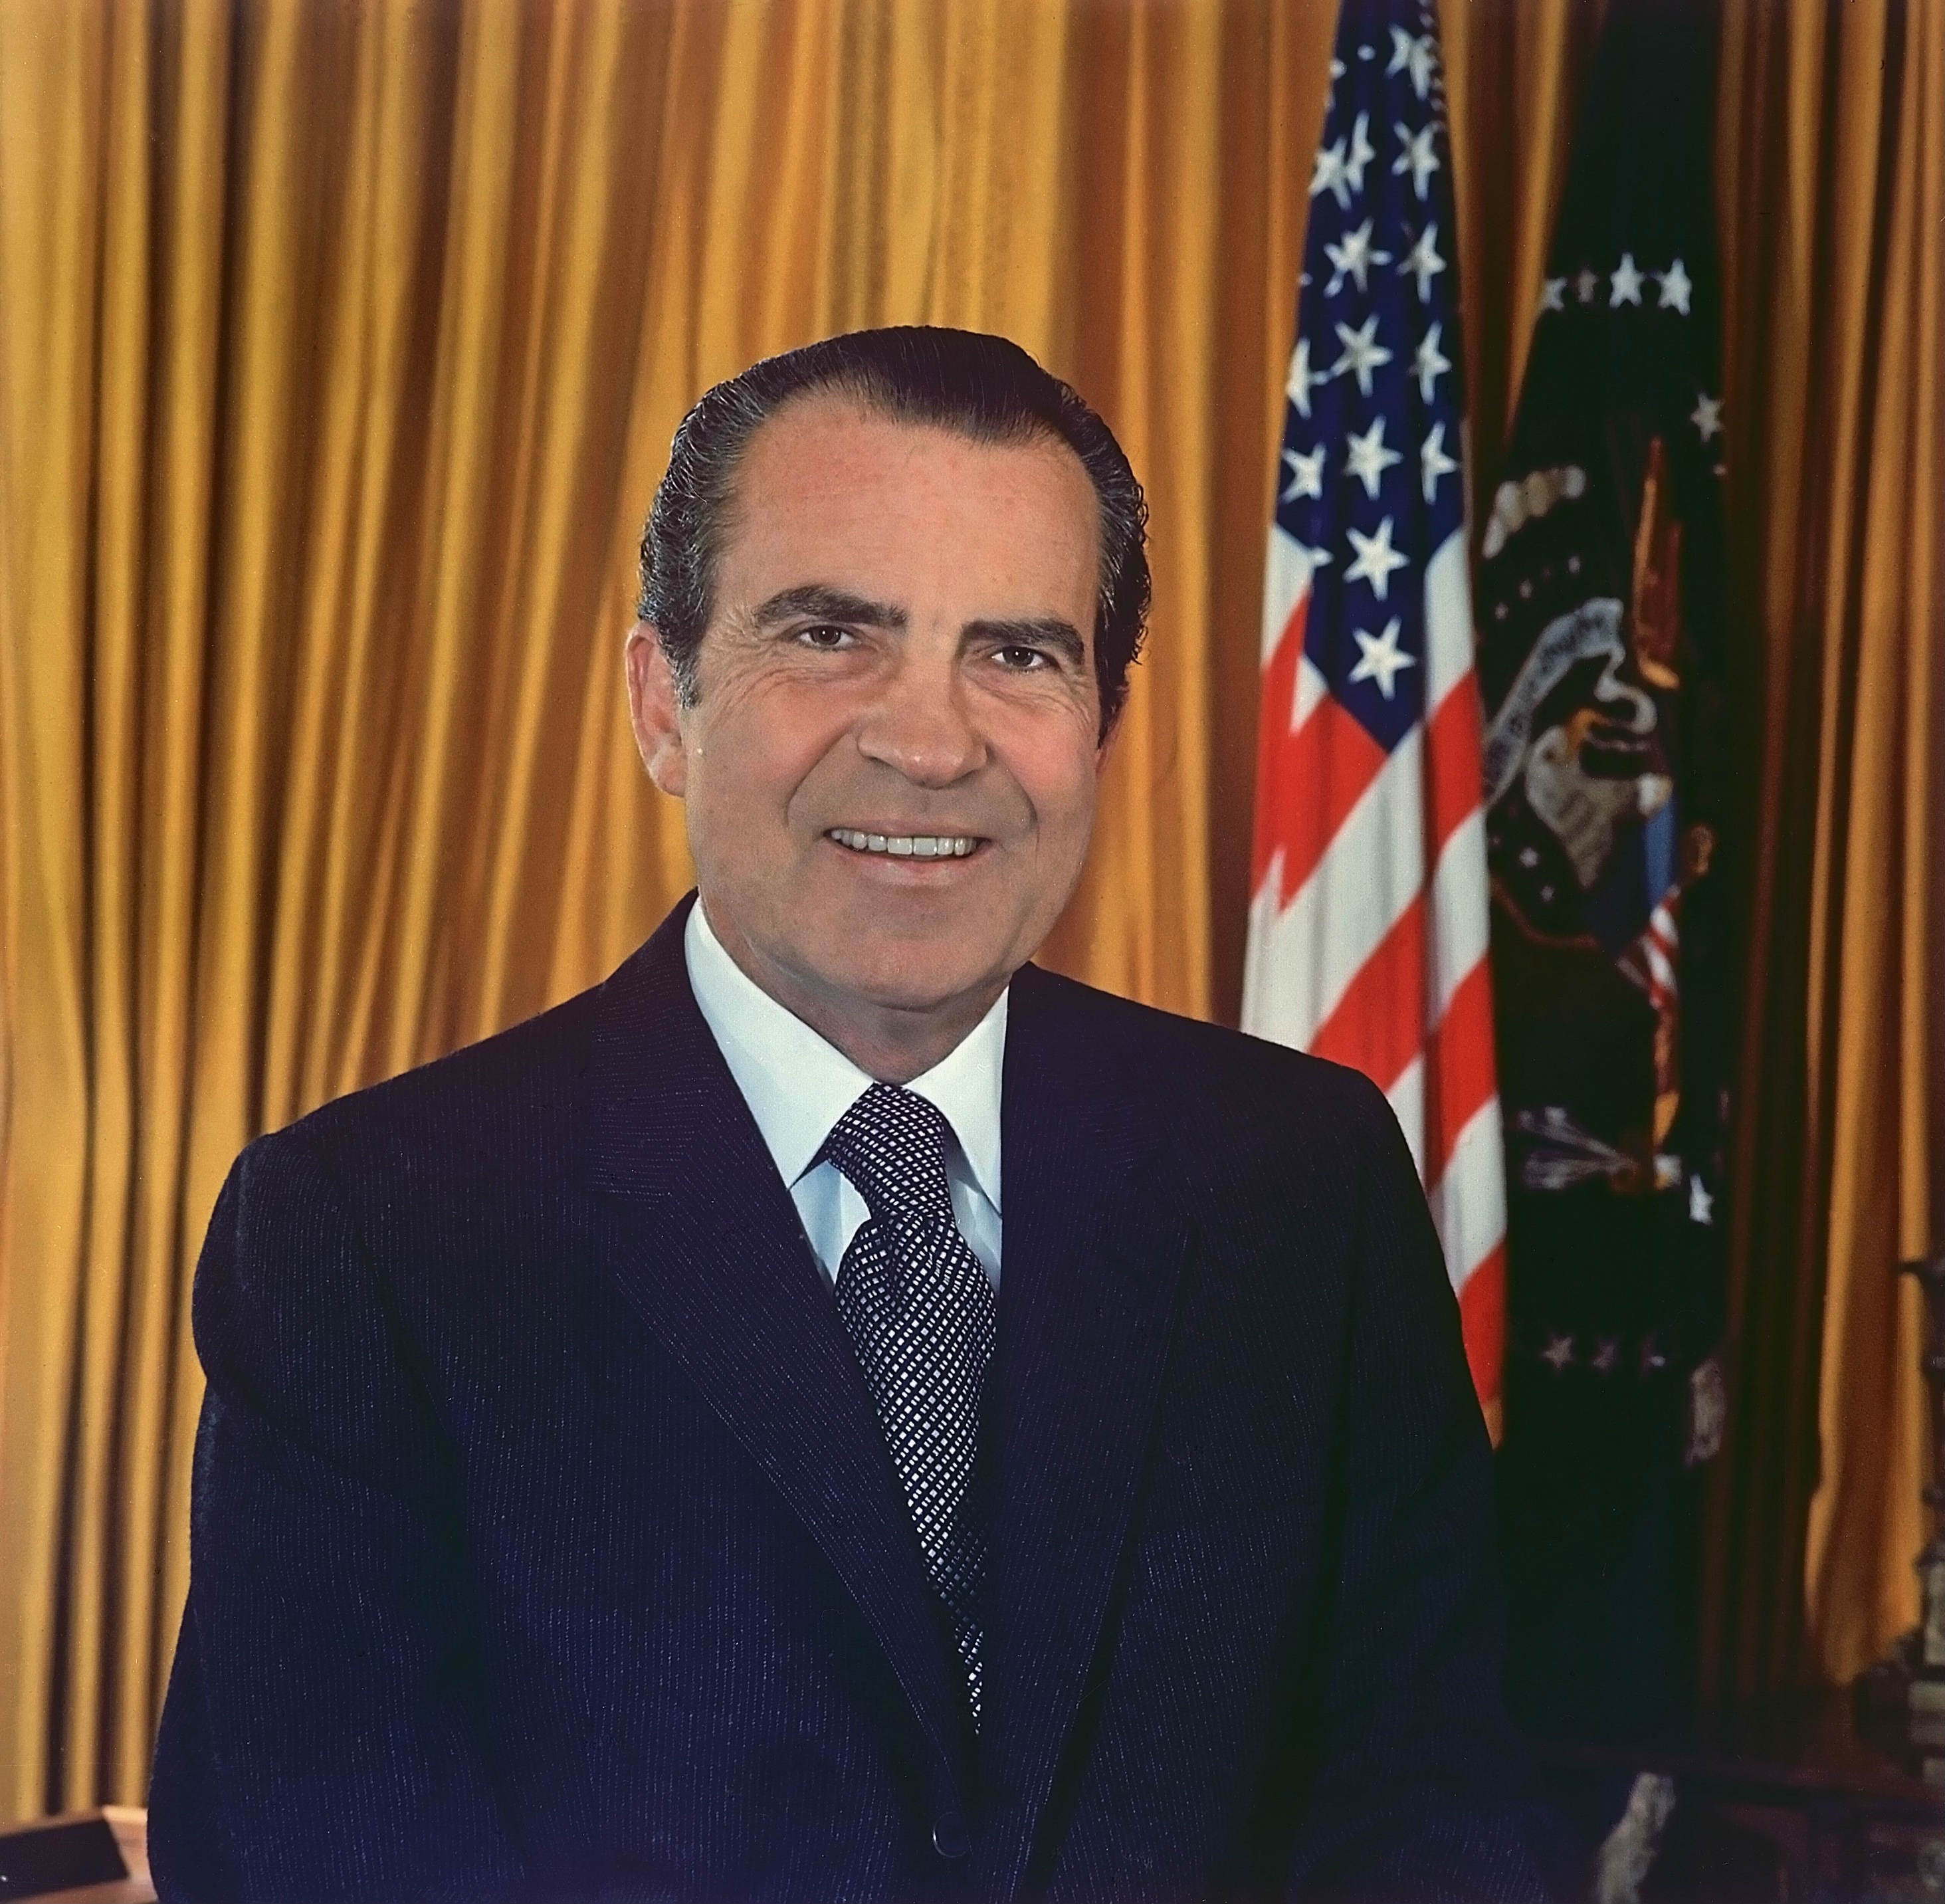 volumen Temprano Quizás Richard Nixon - SensaCine.com